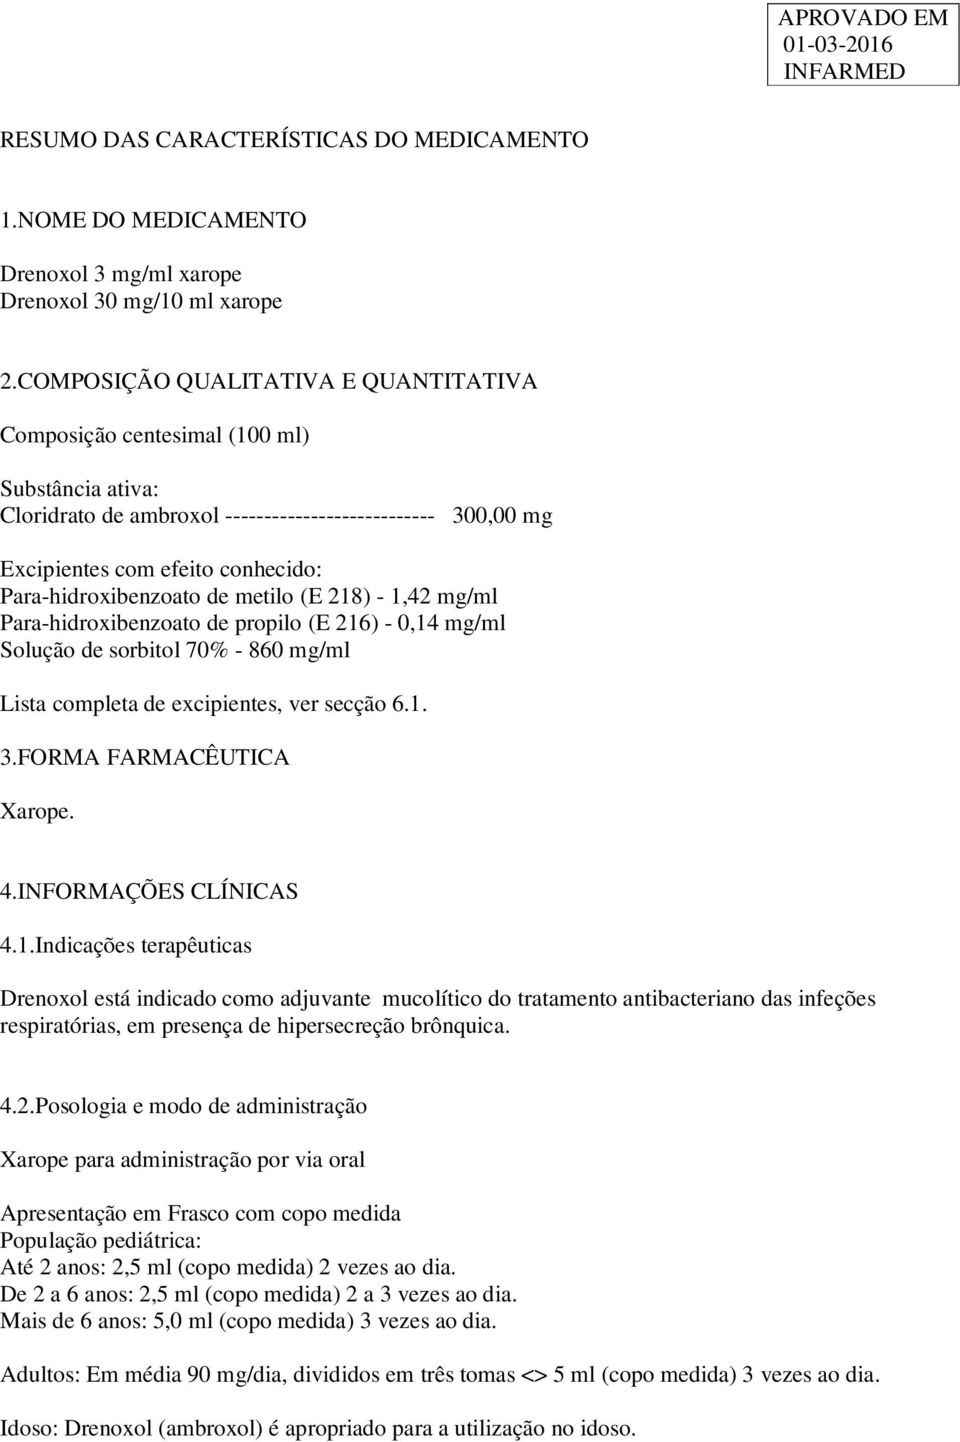 Para-hidroxibenzoato de metilo (E 218) - 1,42 mg/ml Para-hidroxibenzoato de propilo (E 216) - 0,14 mg/ml Solução de sorbitol 70% - 860 mg/ml Lista completa de excipientes, ver secção 6.1. 3.